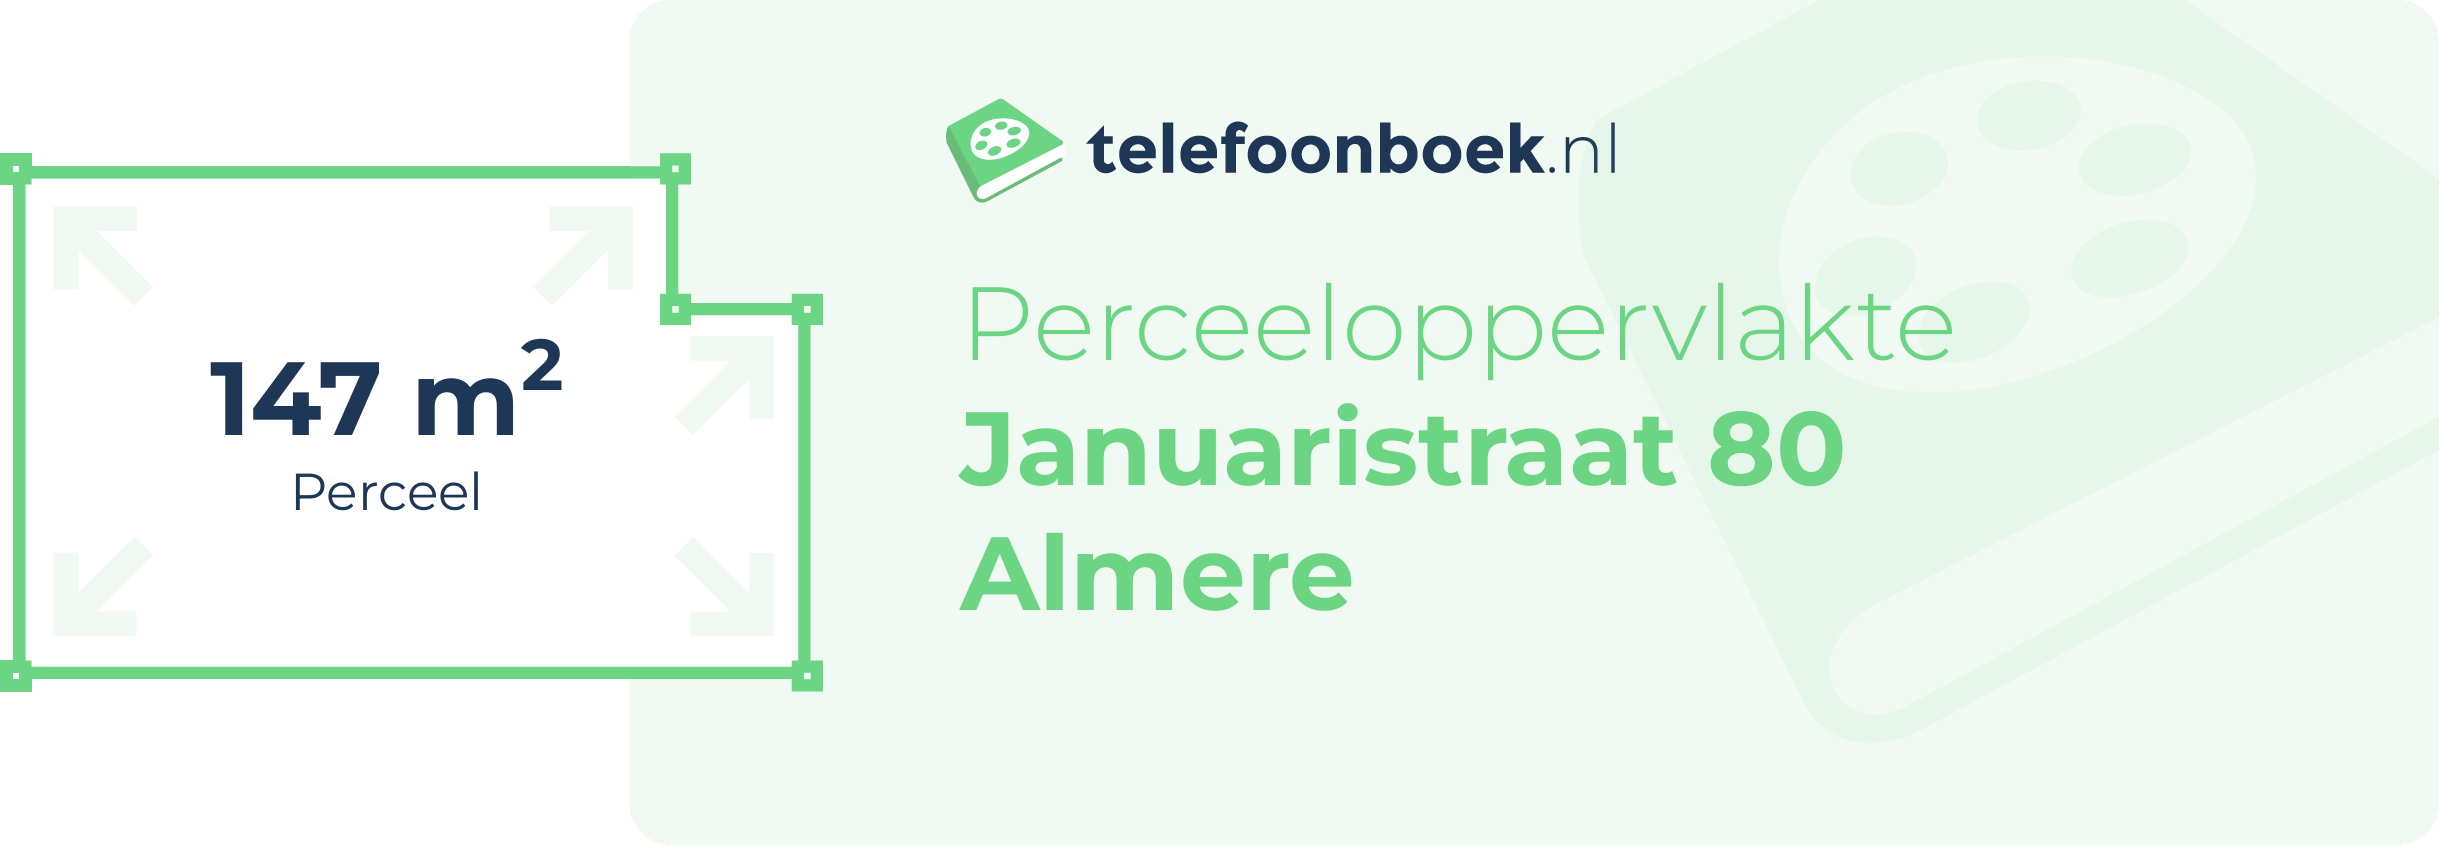 Perceeloppervlakte Januaristraat 80 Almere